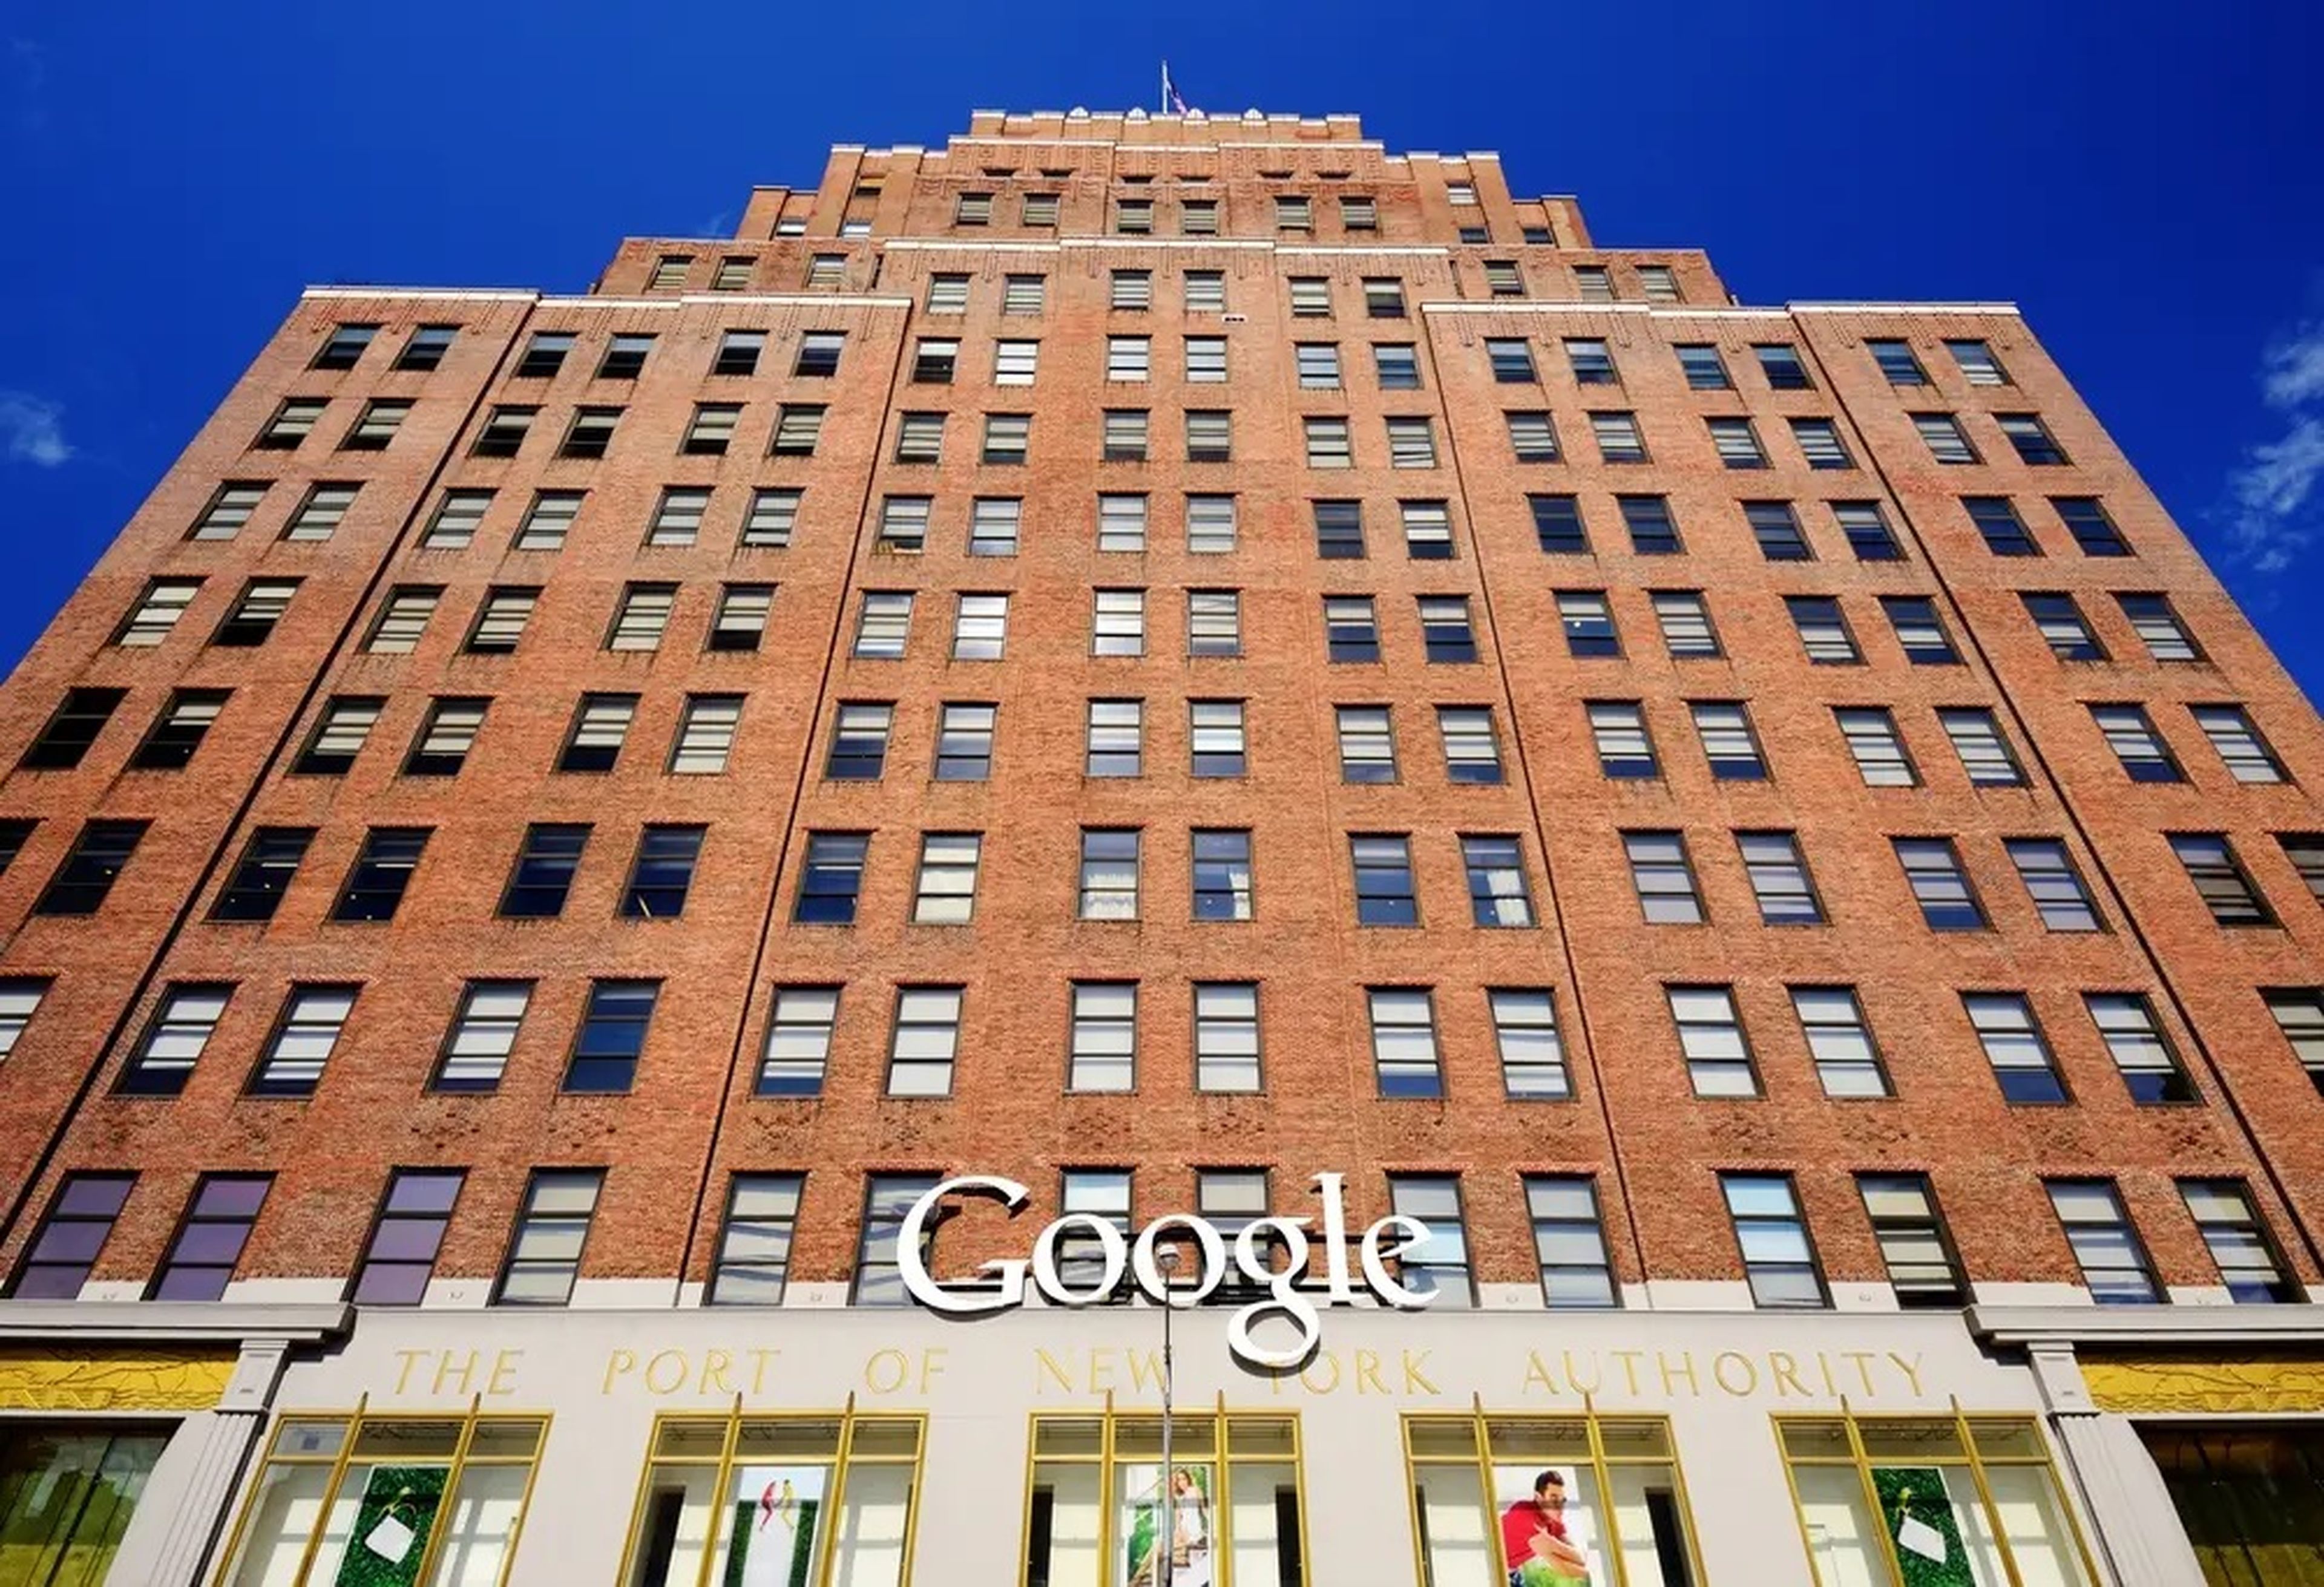 Google office building in Chelsea, New York.